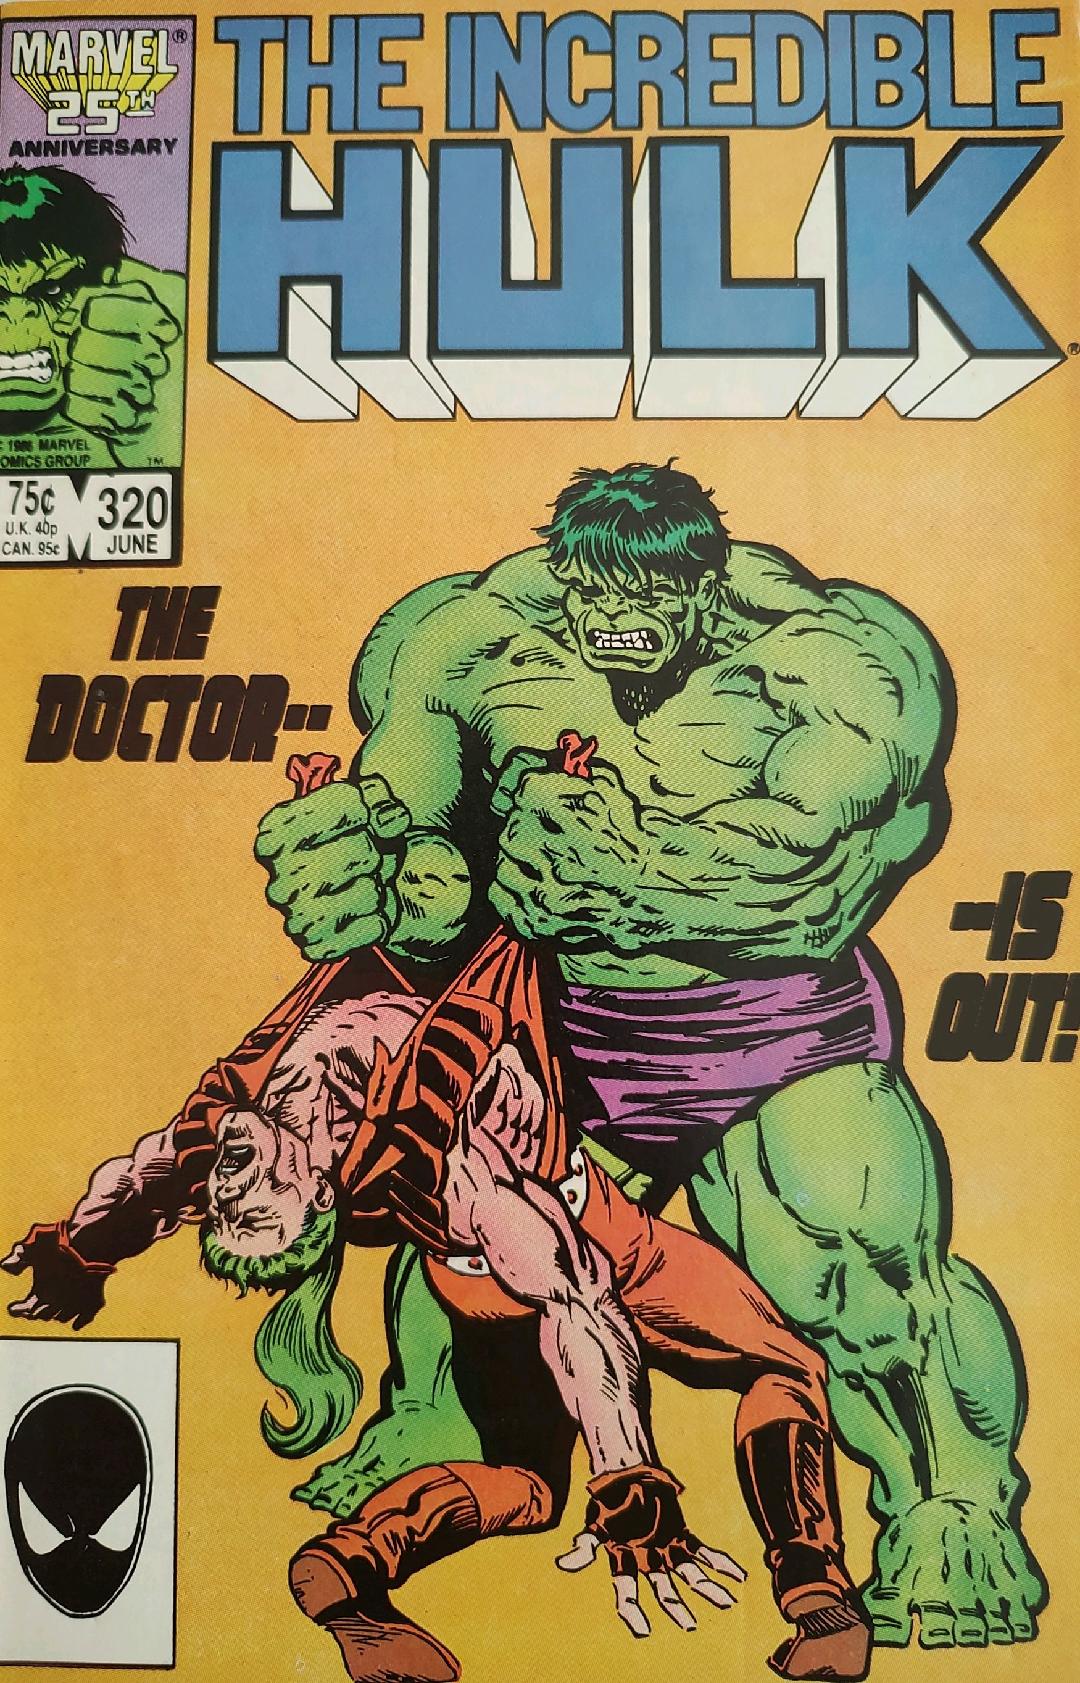 The Incredible Hulk #320 Comic Book Cover